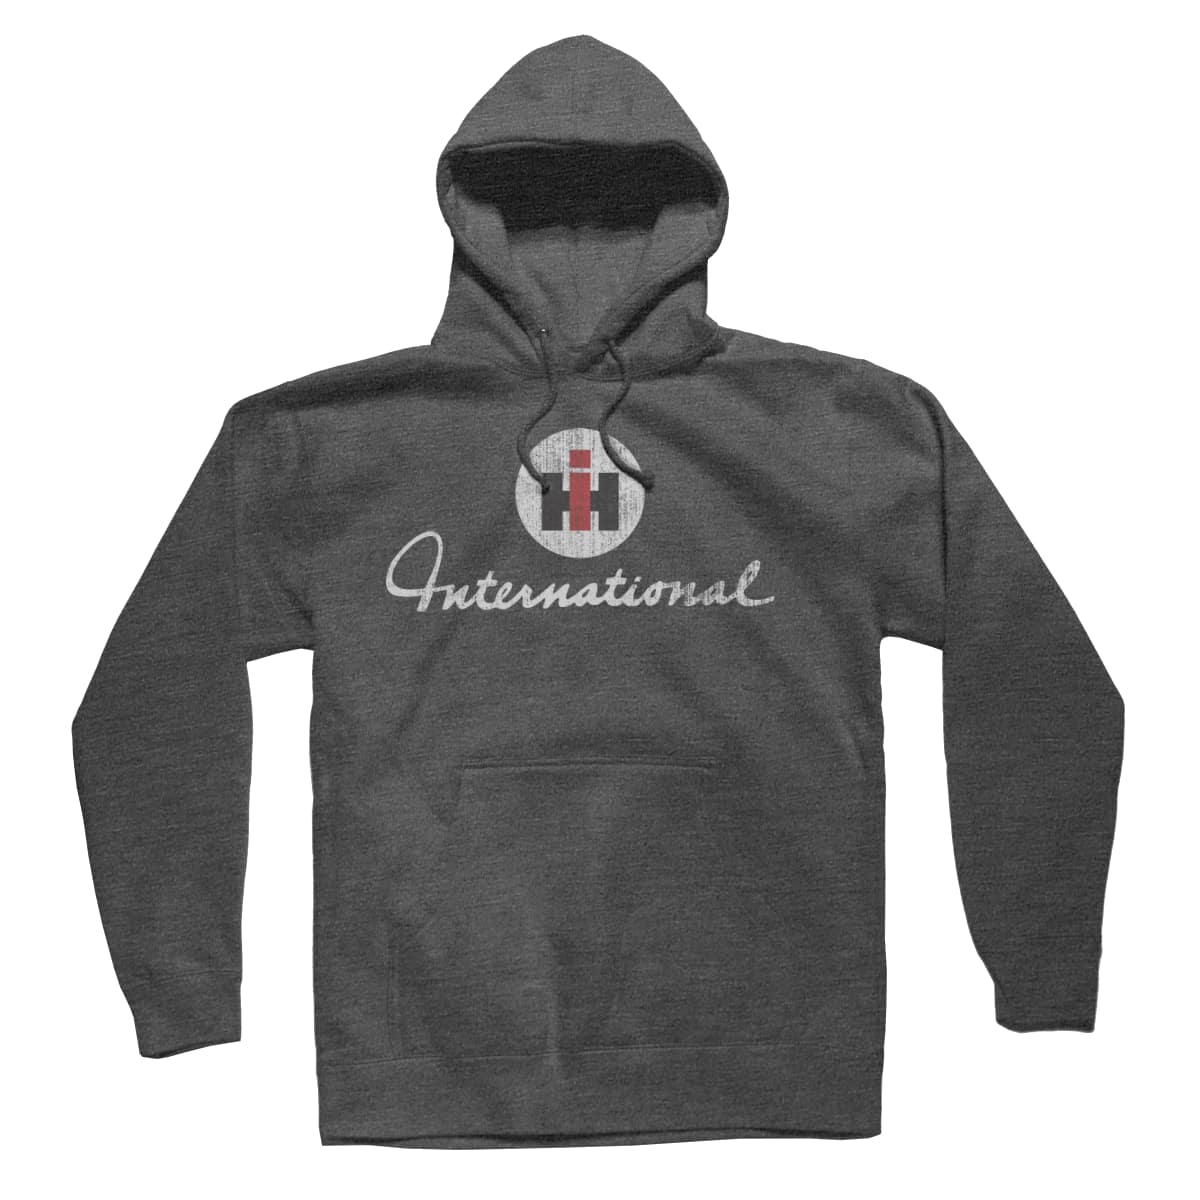 International Harvester Thermal-Lined Hooded Zip-Front Sweatshirt